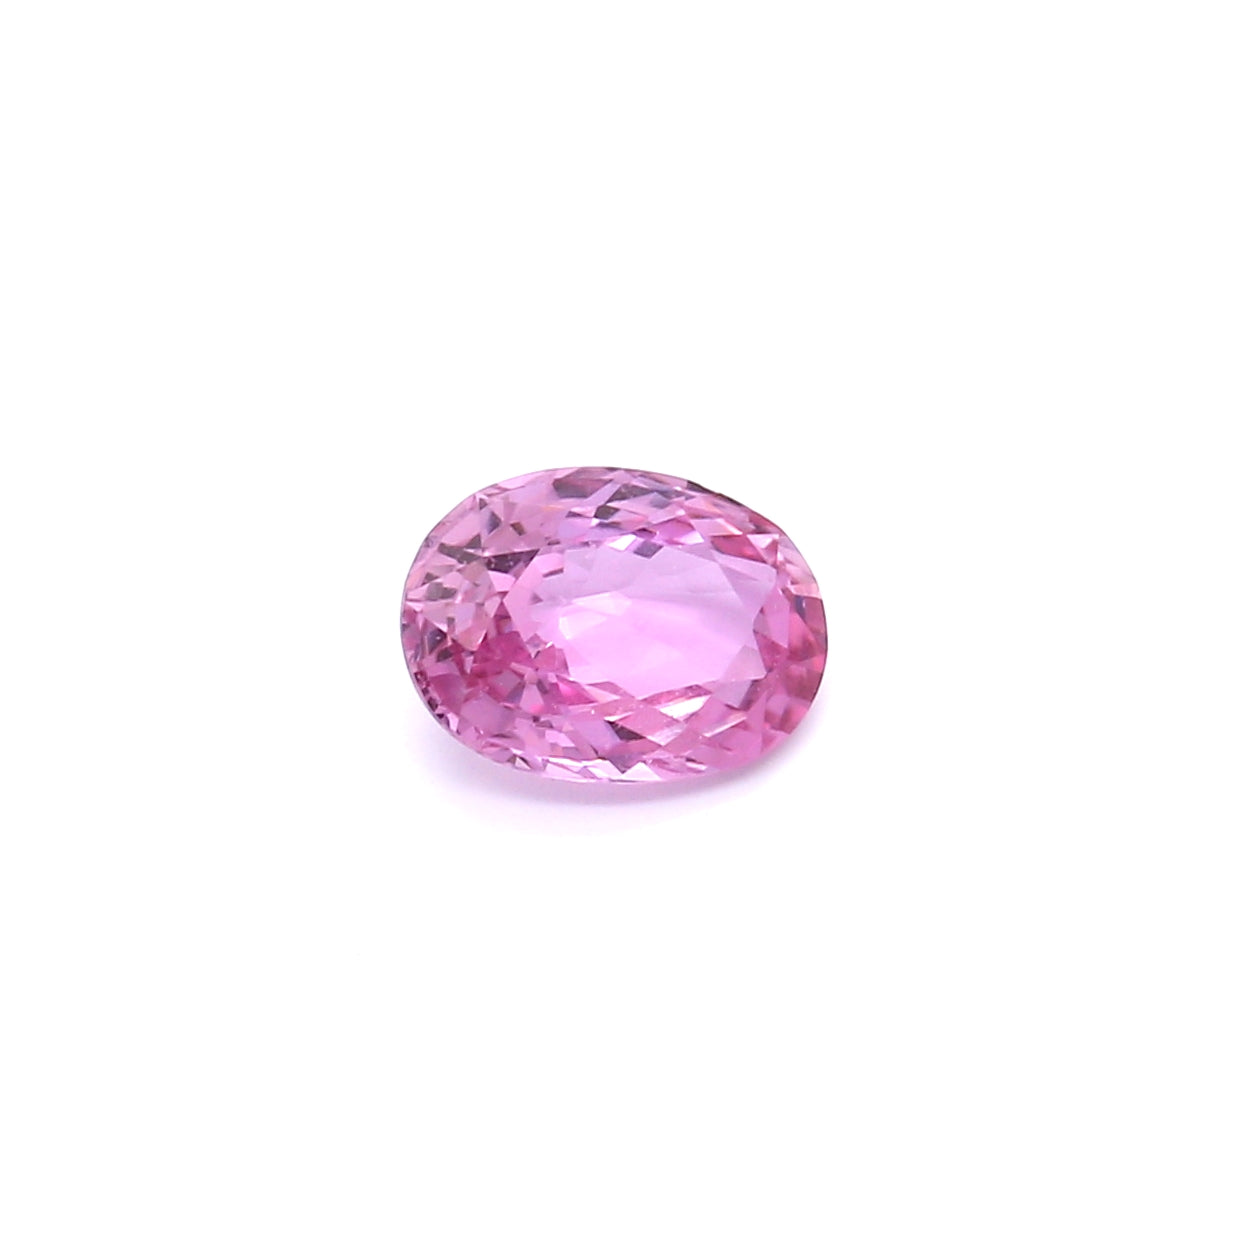 1.32ct Purplish Pink, Oval Sapphire, Heated, Madagascar - 7.66 x 5.63 x 3.52mm